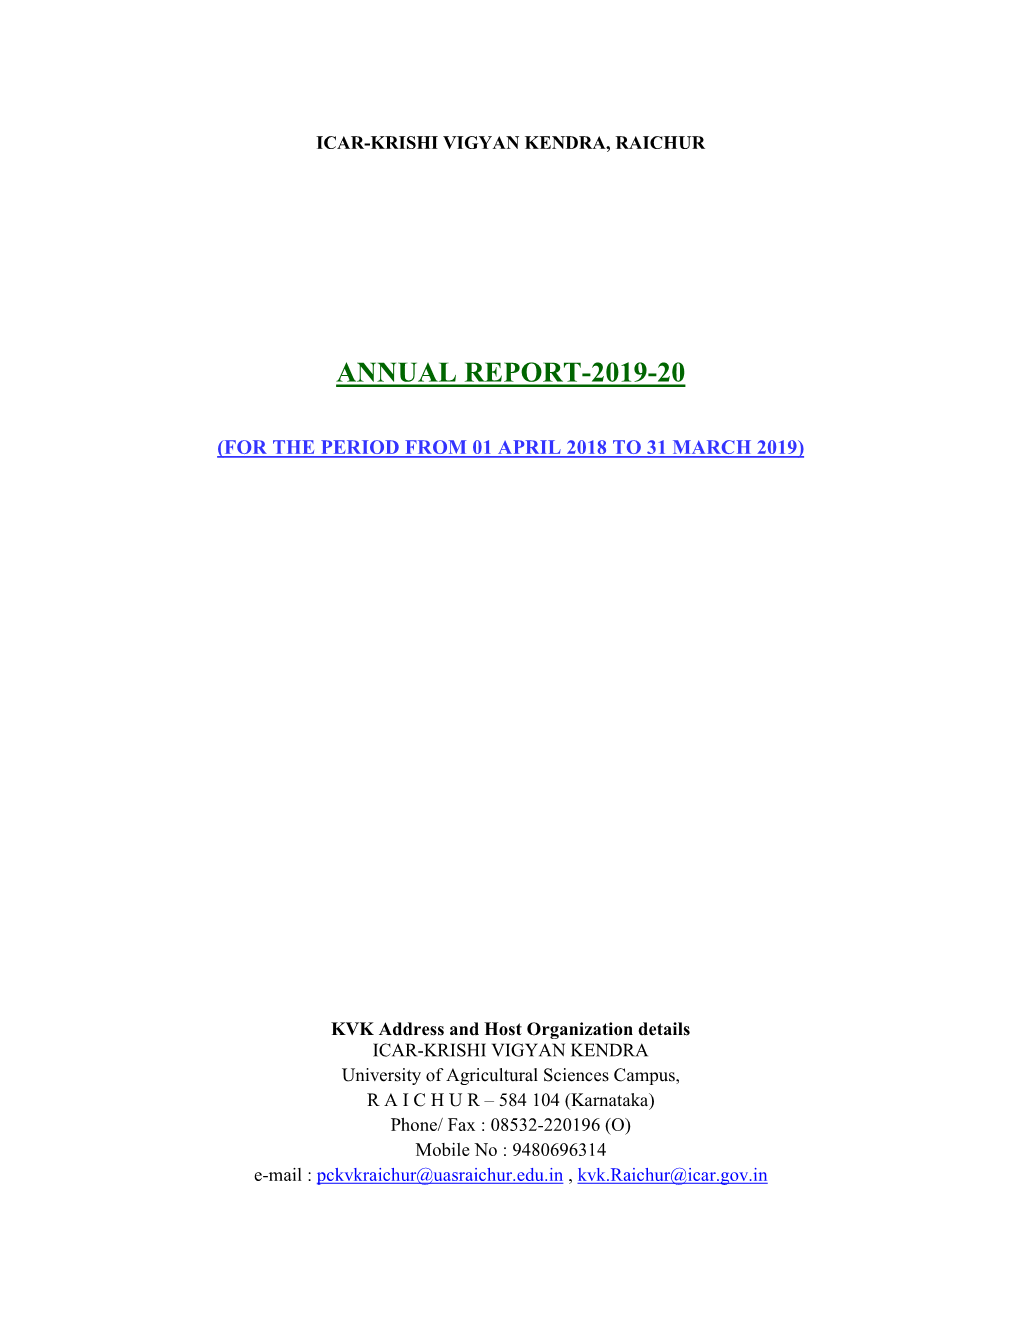 Annual Report-2019-20